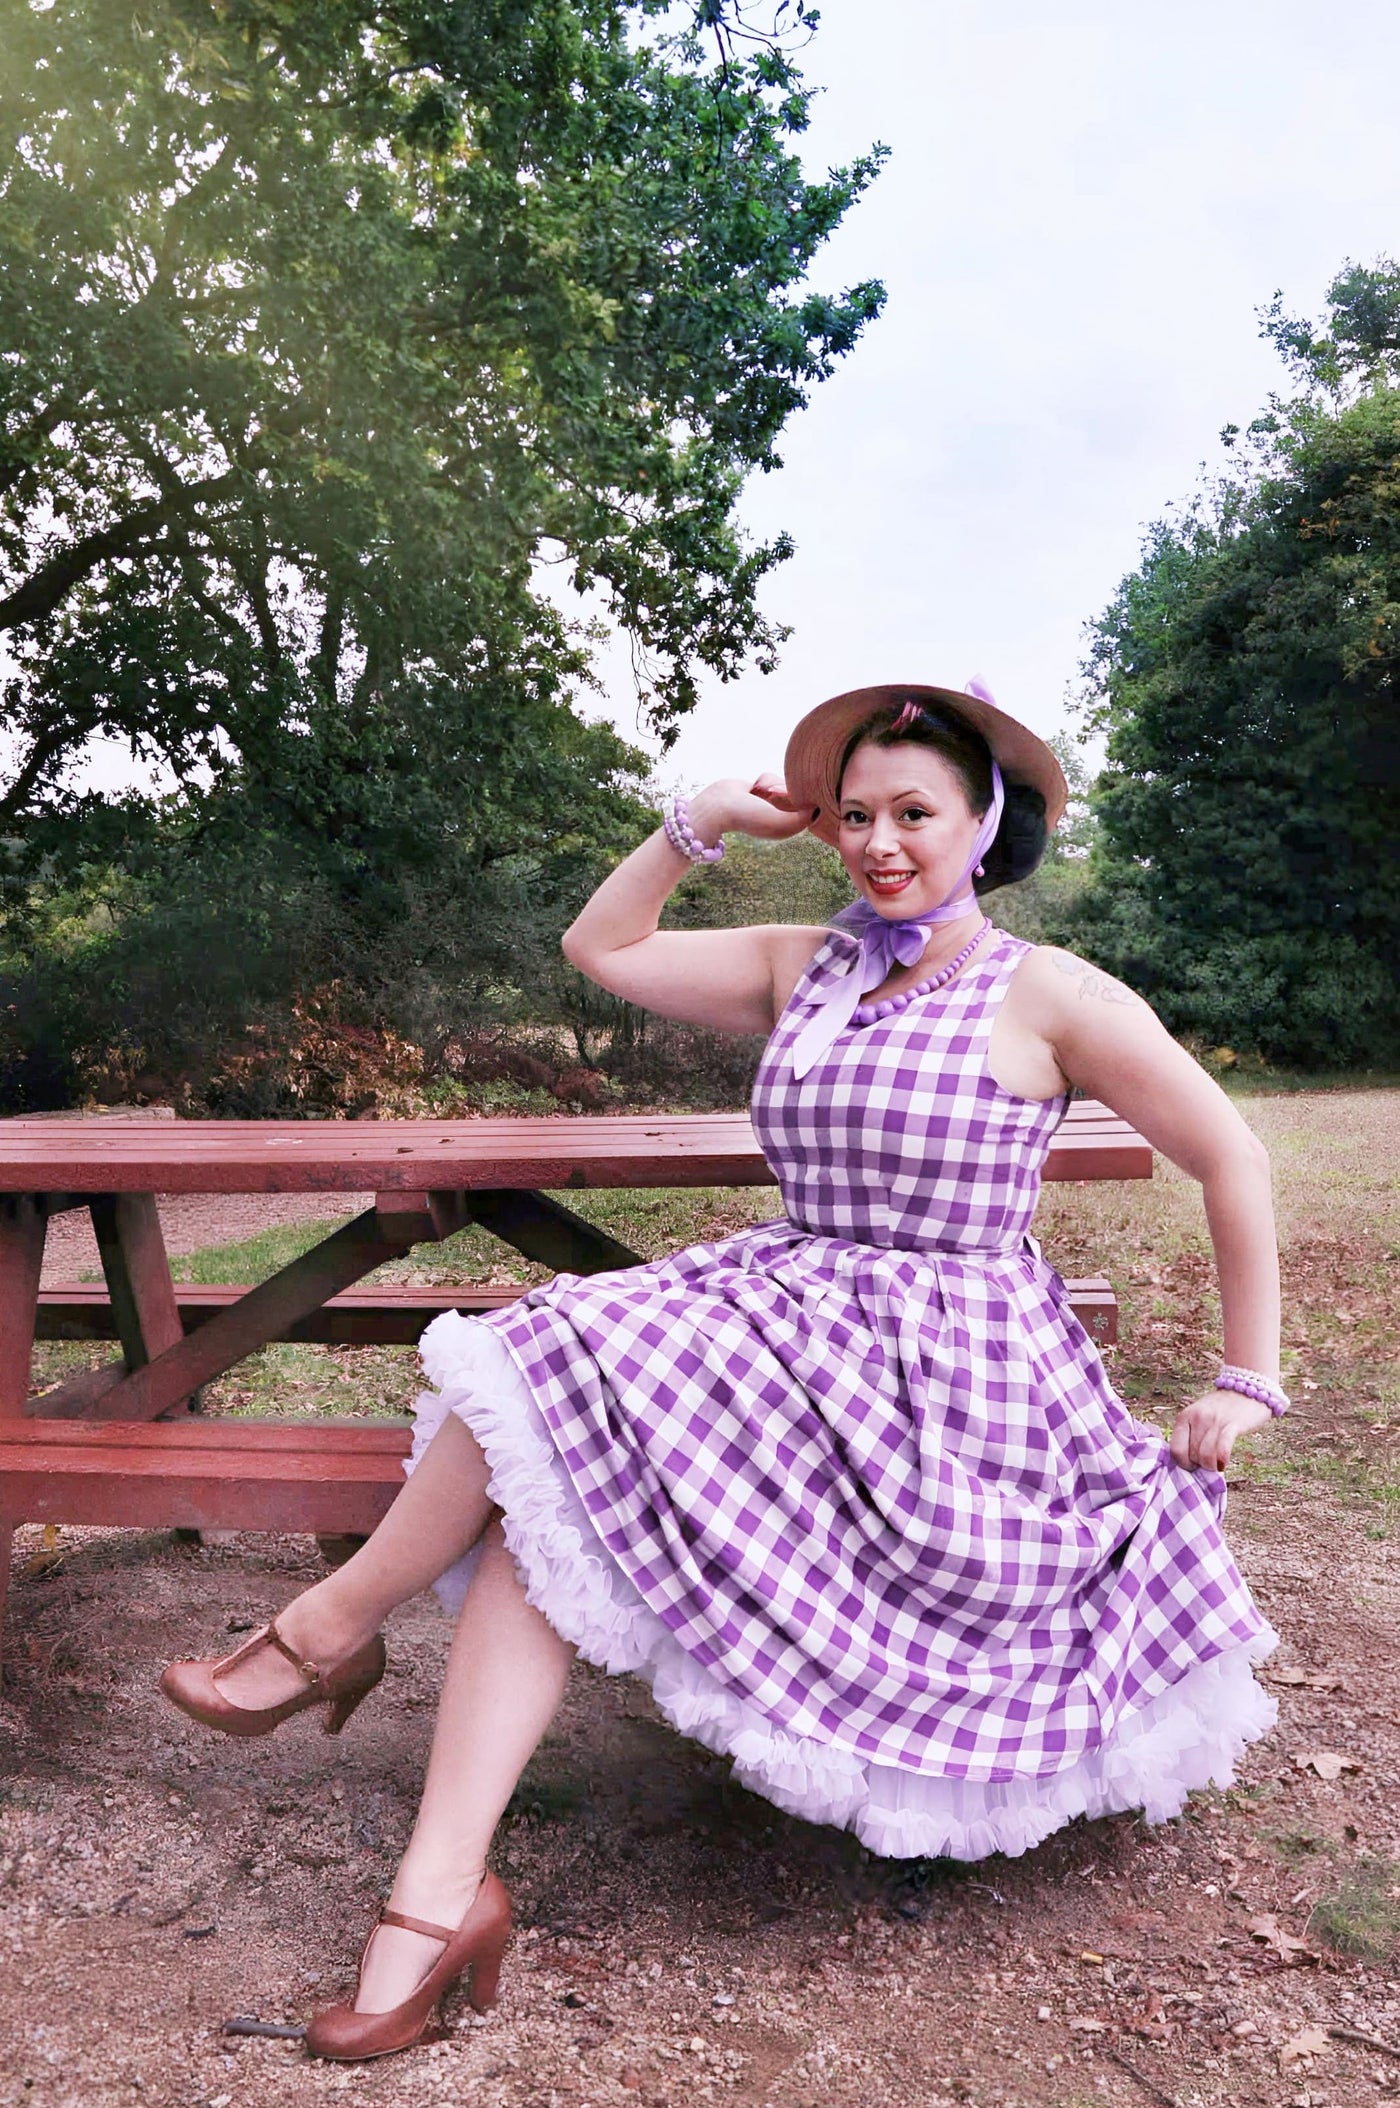 missbunnyceline wearing Vintage Inspired Purple Gingham Swing Dress sitting